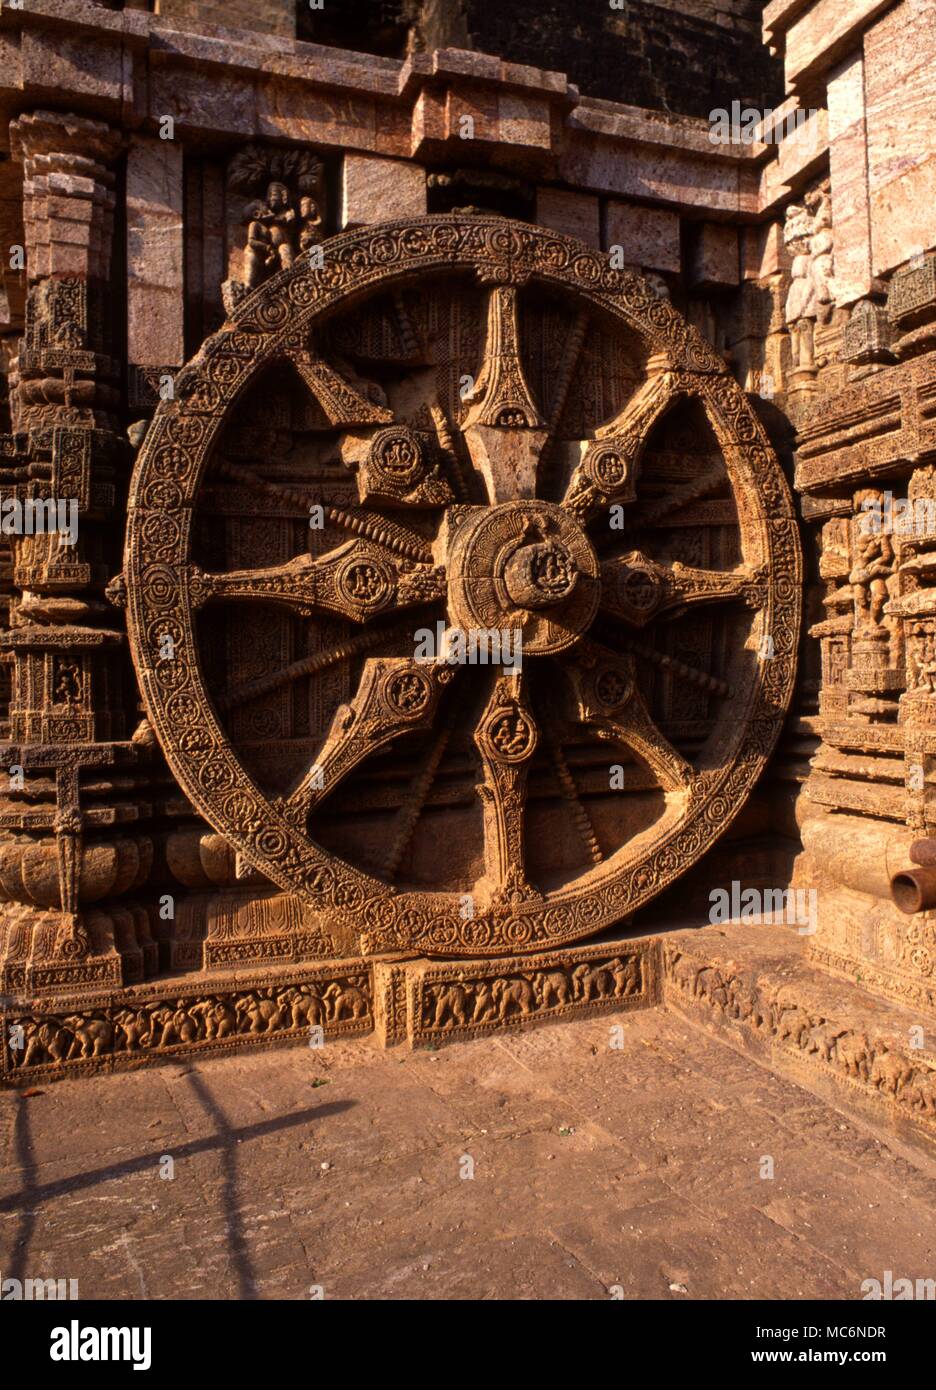 India. 000. Orissa - Konarak. A giant wheel, one of the wheels of the 'chariot', or temple, of the Sun-God, Surya, at Konarak. Stock Photo